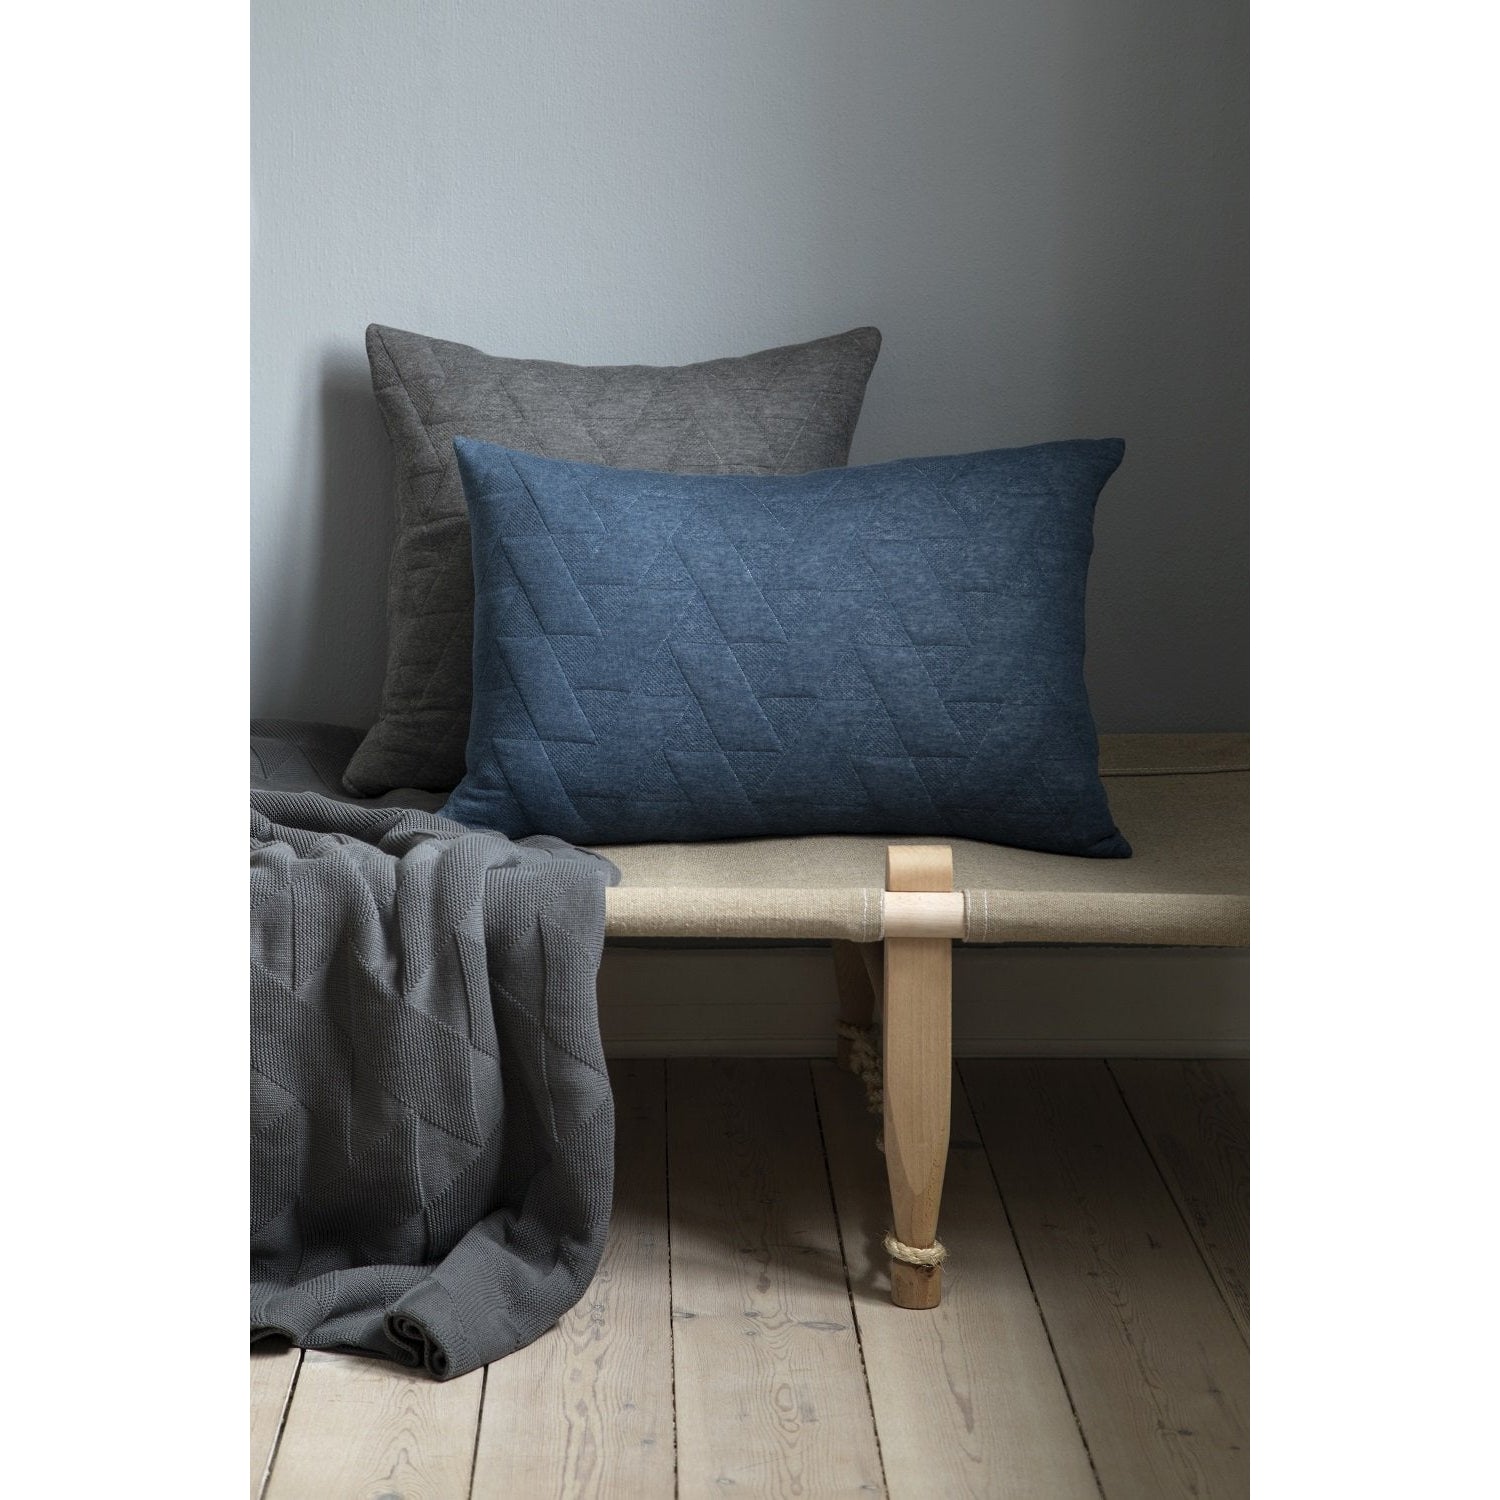 Architectmade Finn Juhl Pattern Cushion, Grey 40x60